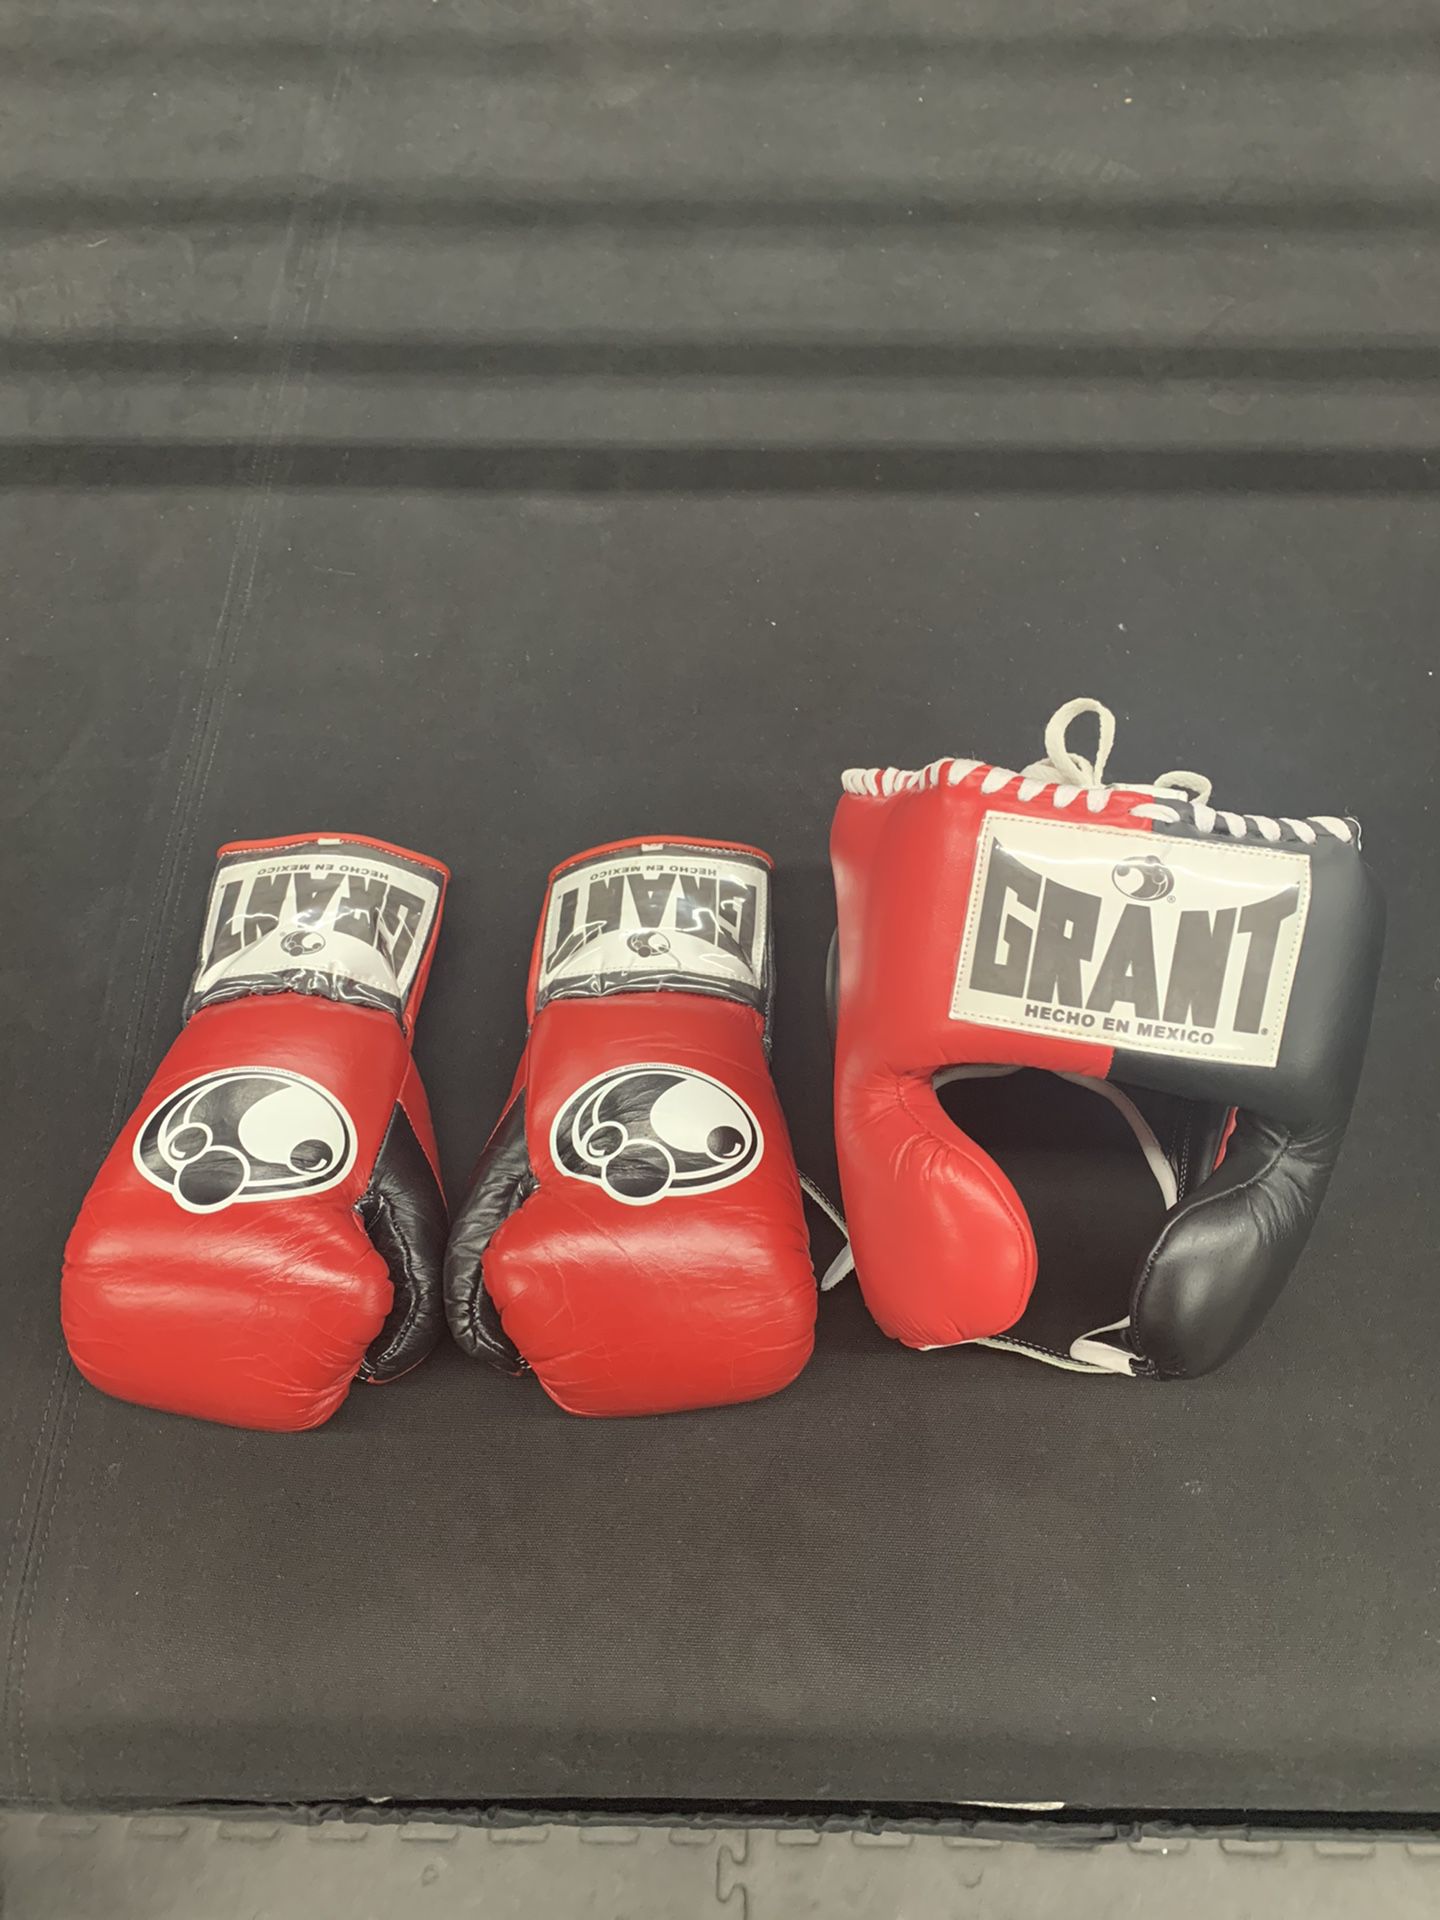 GRANT 10 oz boxing gloves and boxing headgear original